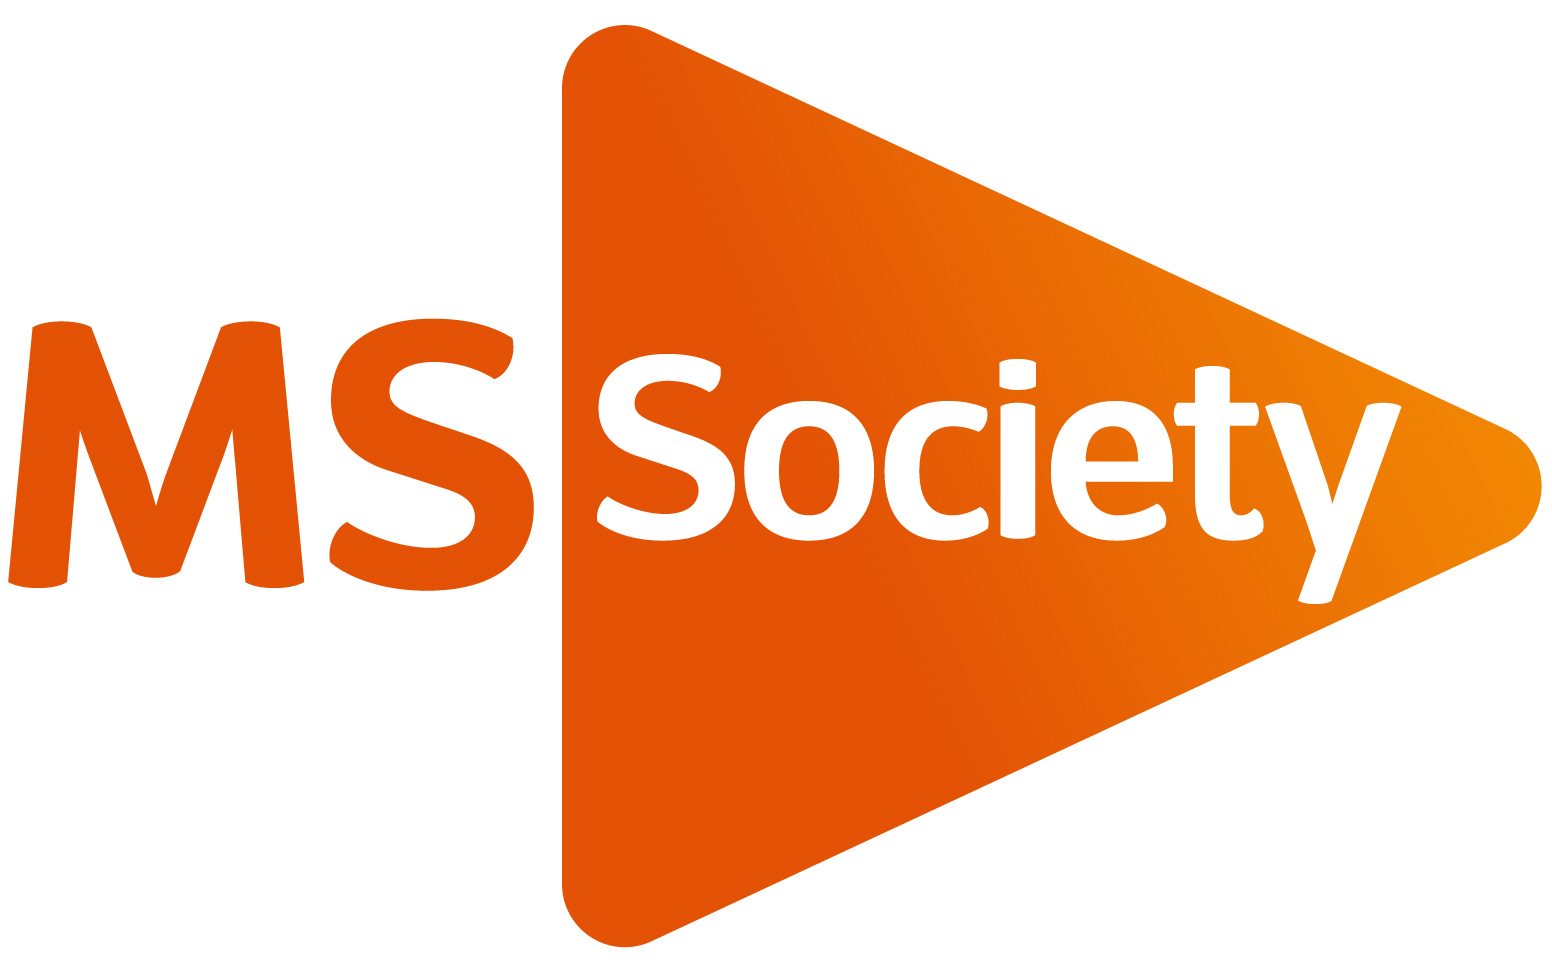 ms society